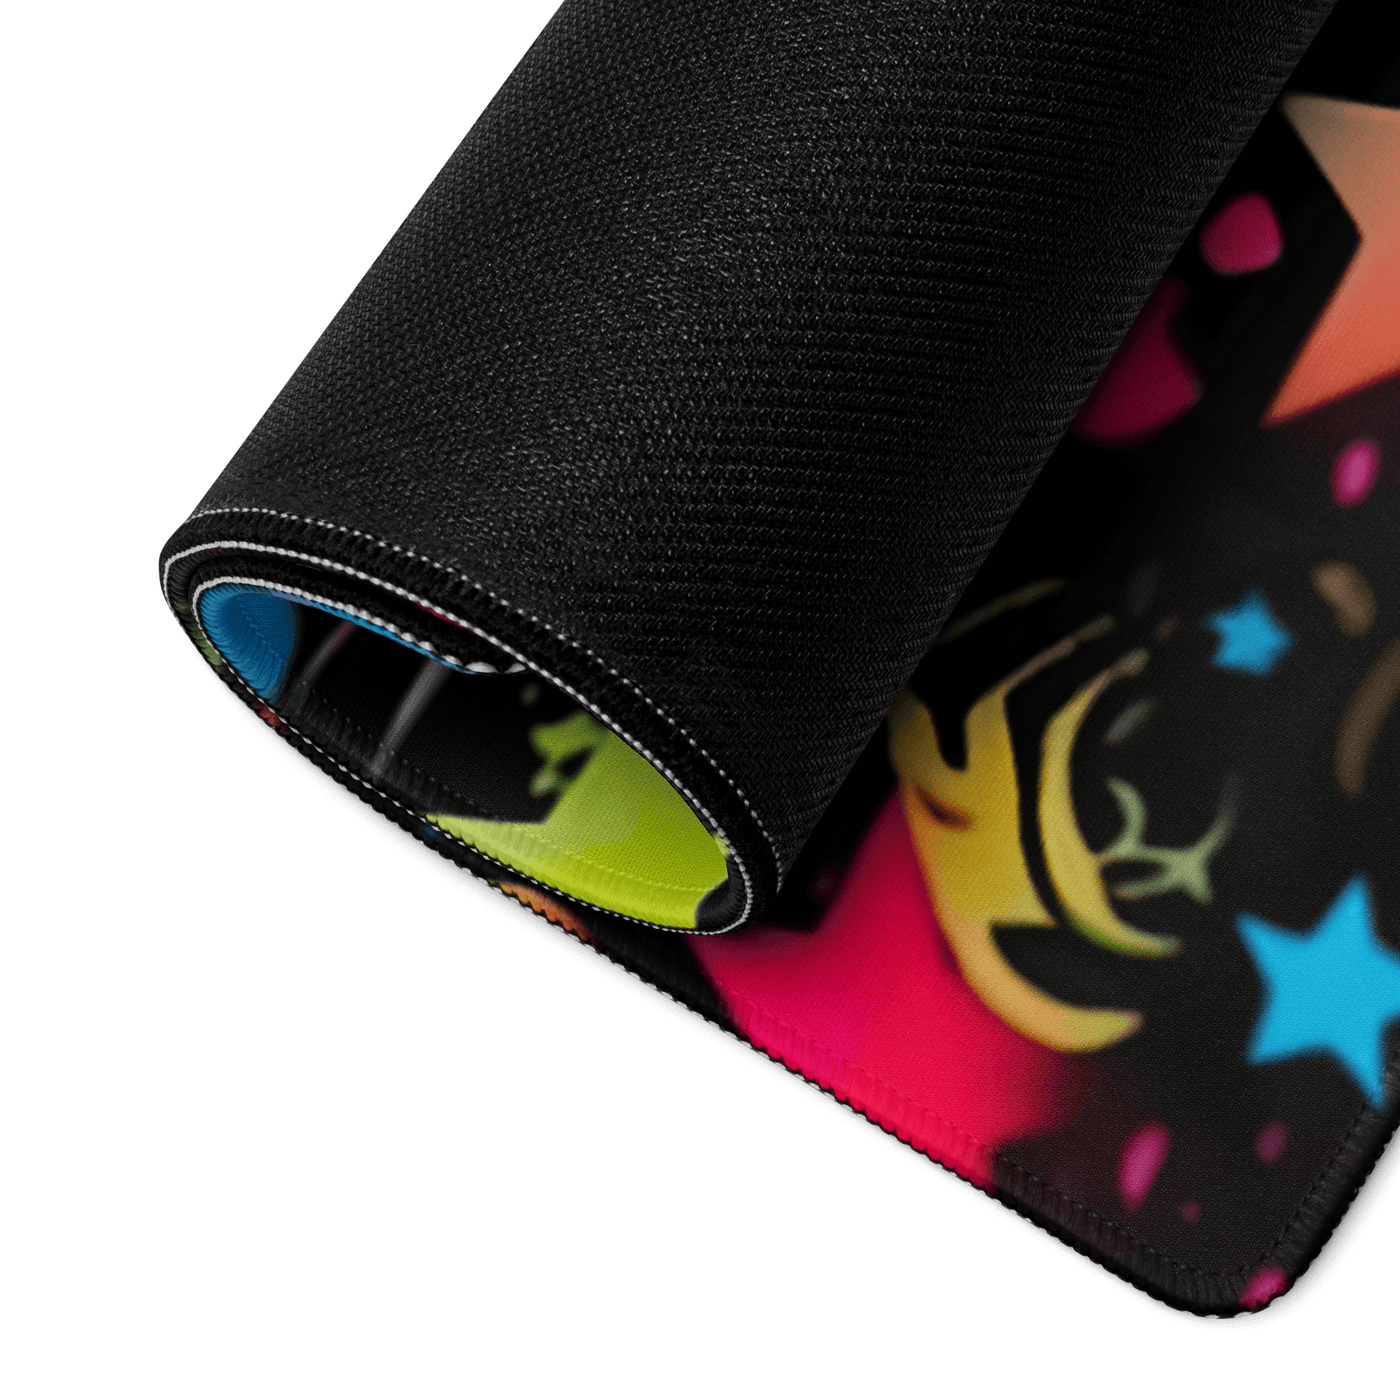 Premium Gaming Mouse Pad | Colorful Stars & Splatters